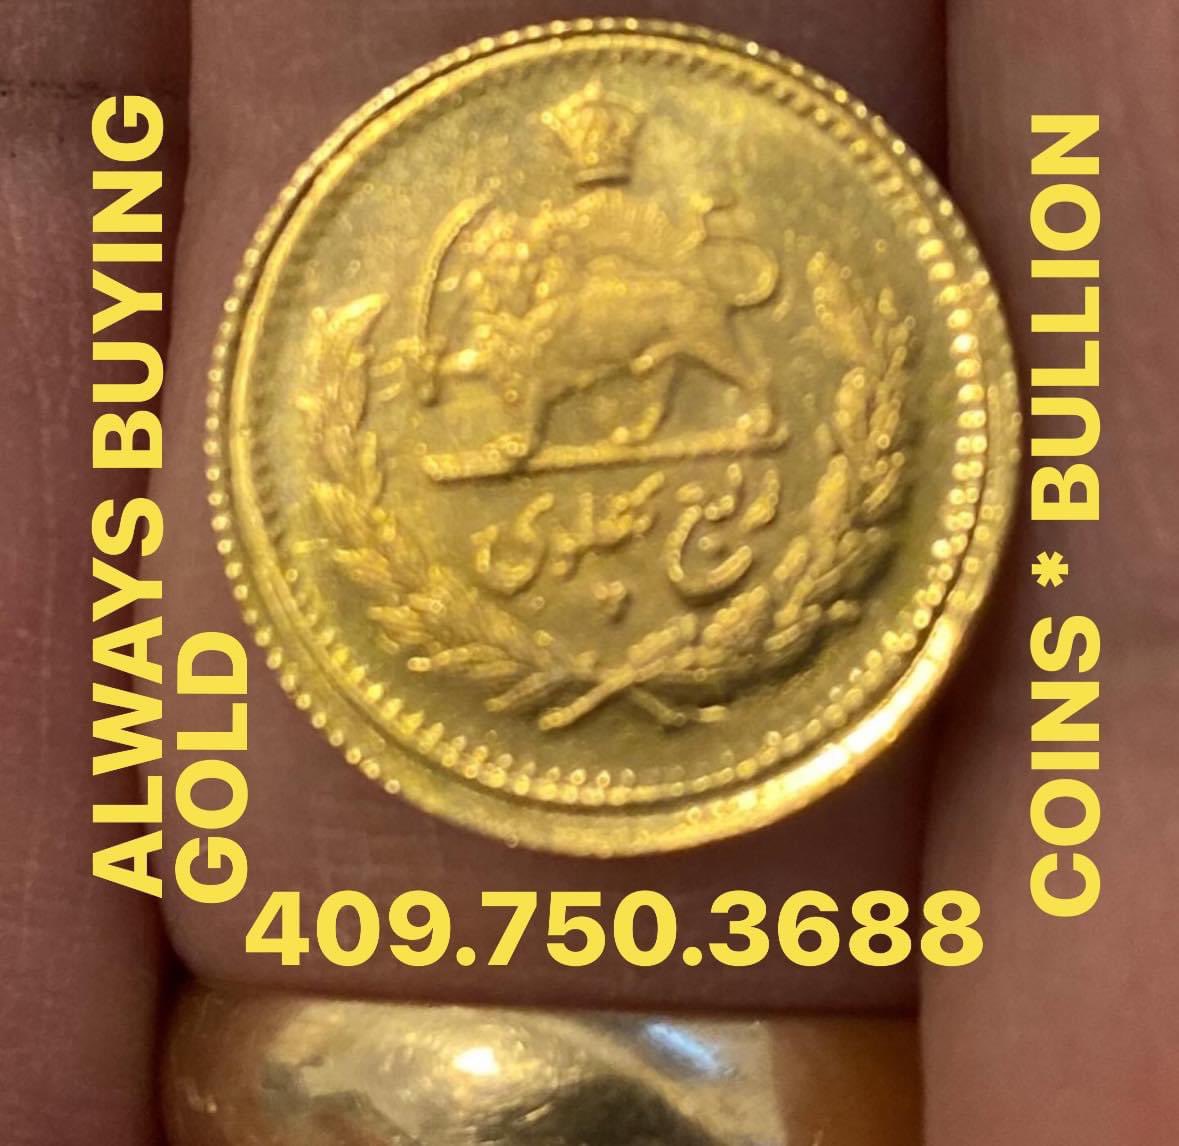 COIN SHOP 612 5th Avenue North, Texas City, Texas, 77590 Roland Dressler 409.750.3688 I Buy Gold #GoldCoins #GoldBullion #GoldJewelry #RolandDressler #ShopTexasCity #ExploreTexasCity #EstateJewelryBuyer #ScrapGold #DentalGold #CoinCollections #JewelryBuyer #CoinShopTexasCity